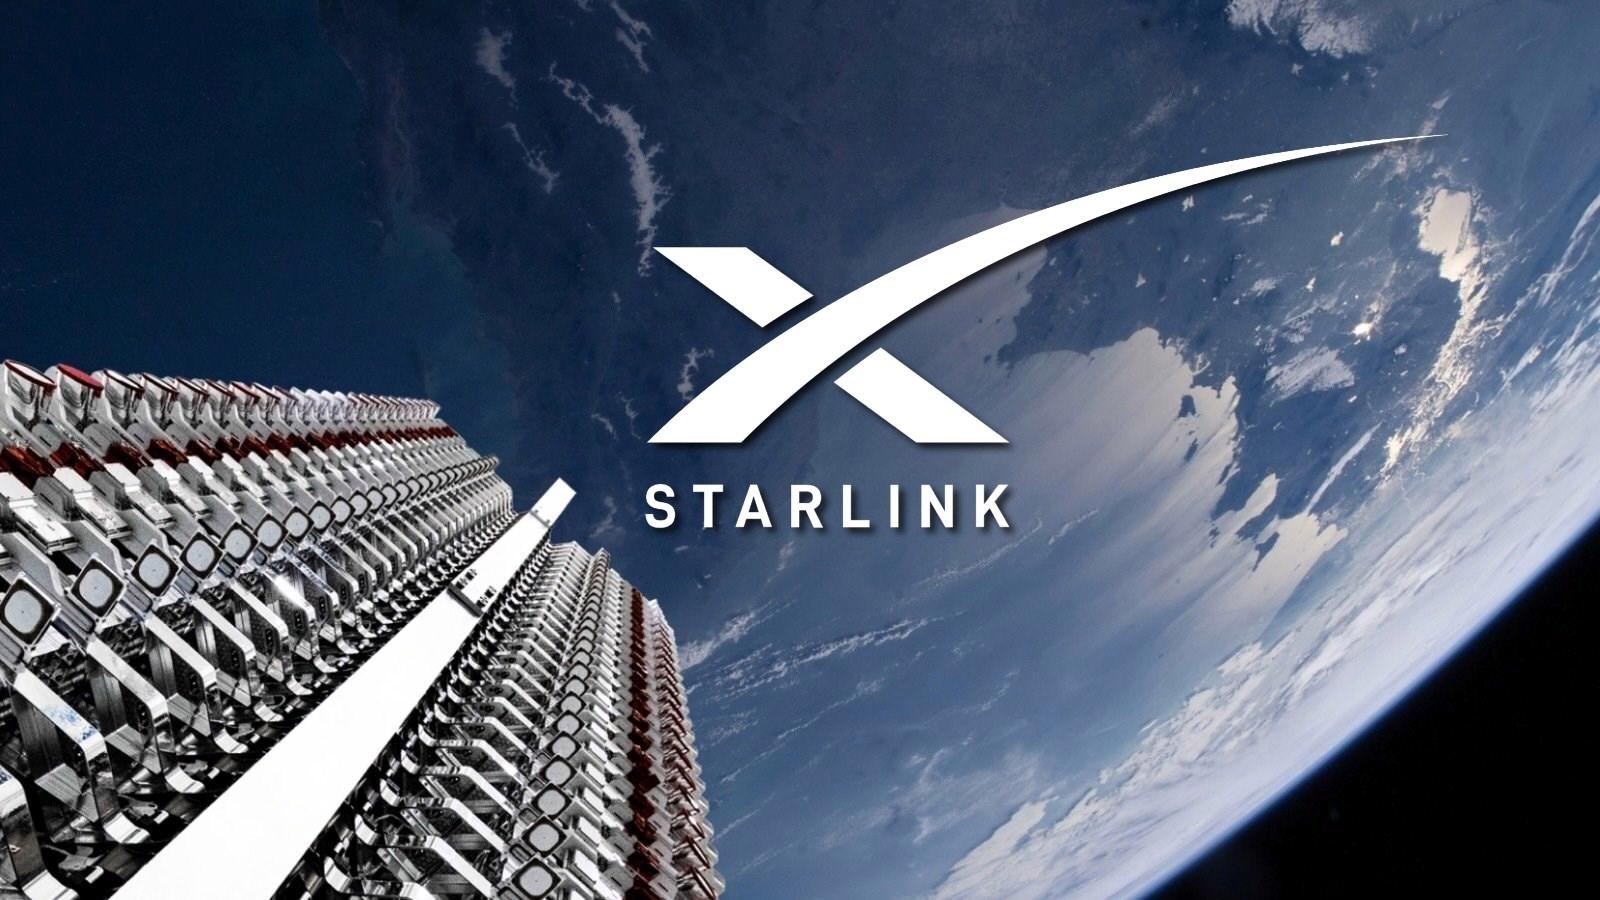 spacexin-starlink-internet-uydularinin-sayisi-6-bin-oldu-4PkXhUZH.jpg